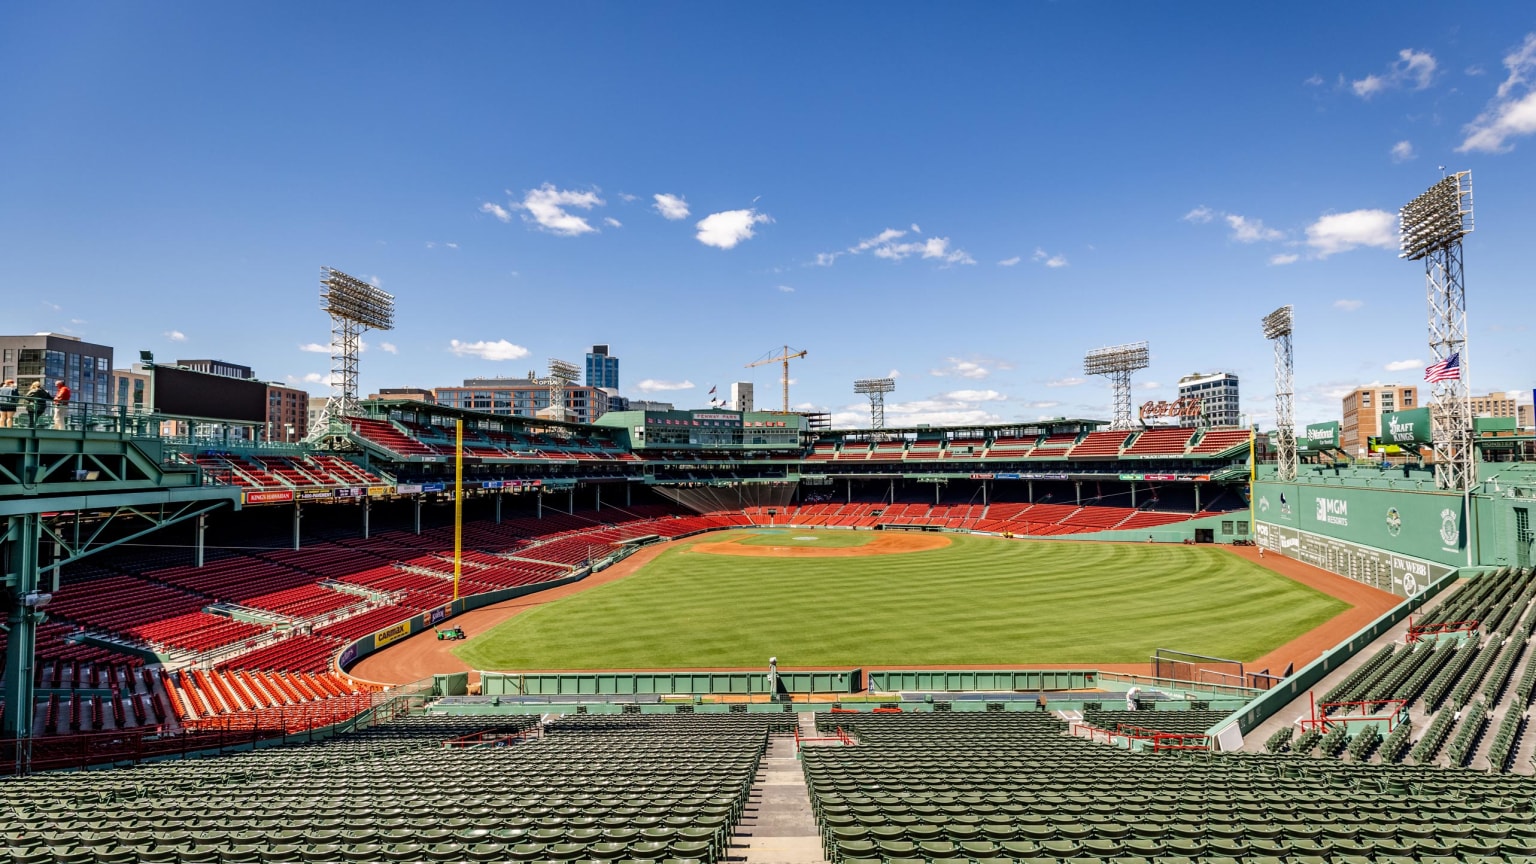 Fenway Park is Baseball Paradise #boston #mlb #baseball #redsox #sweet